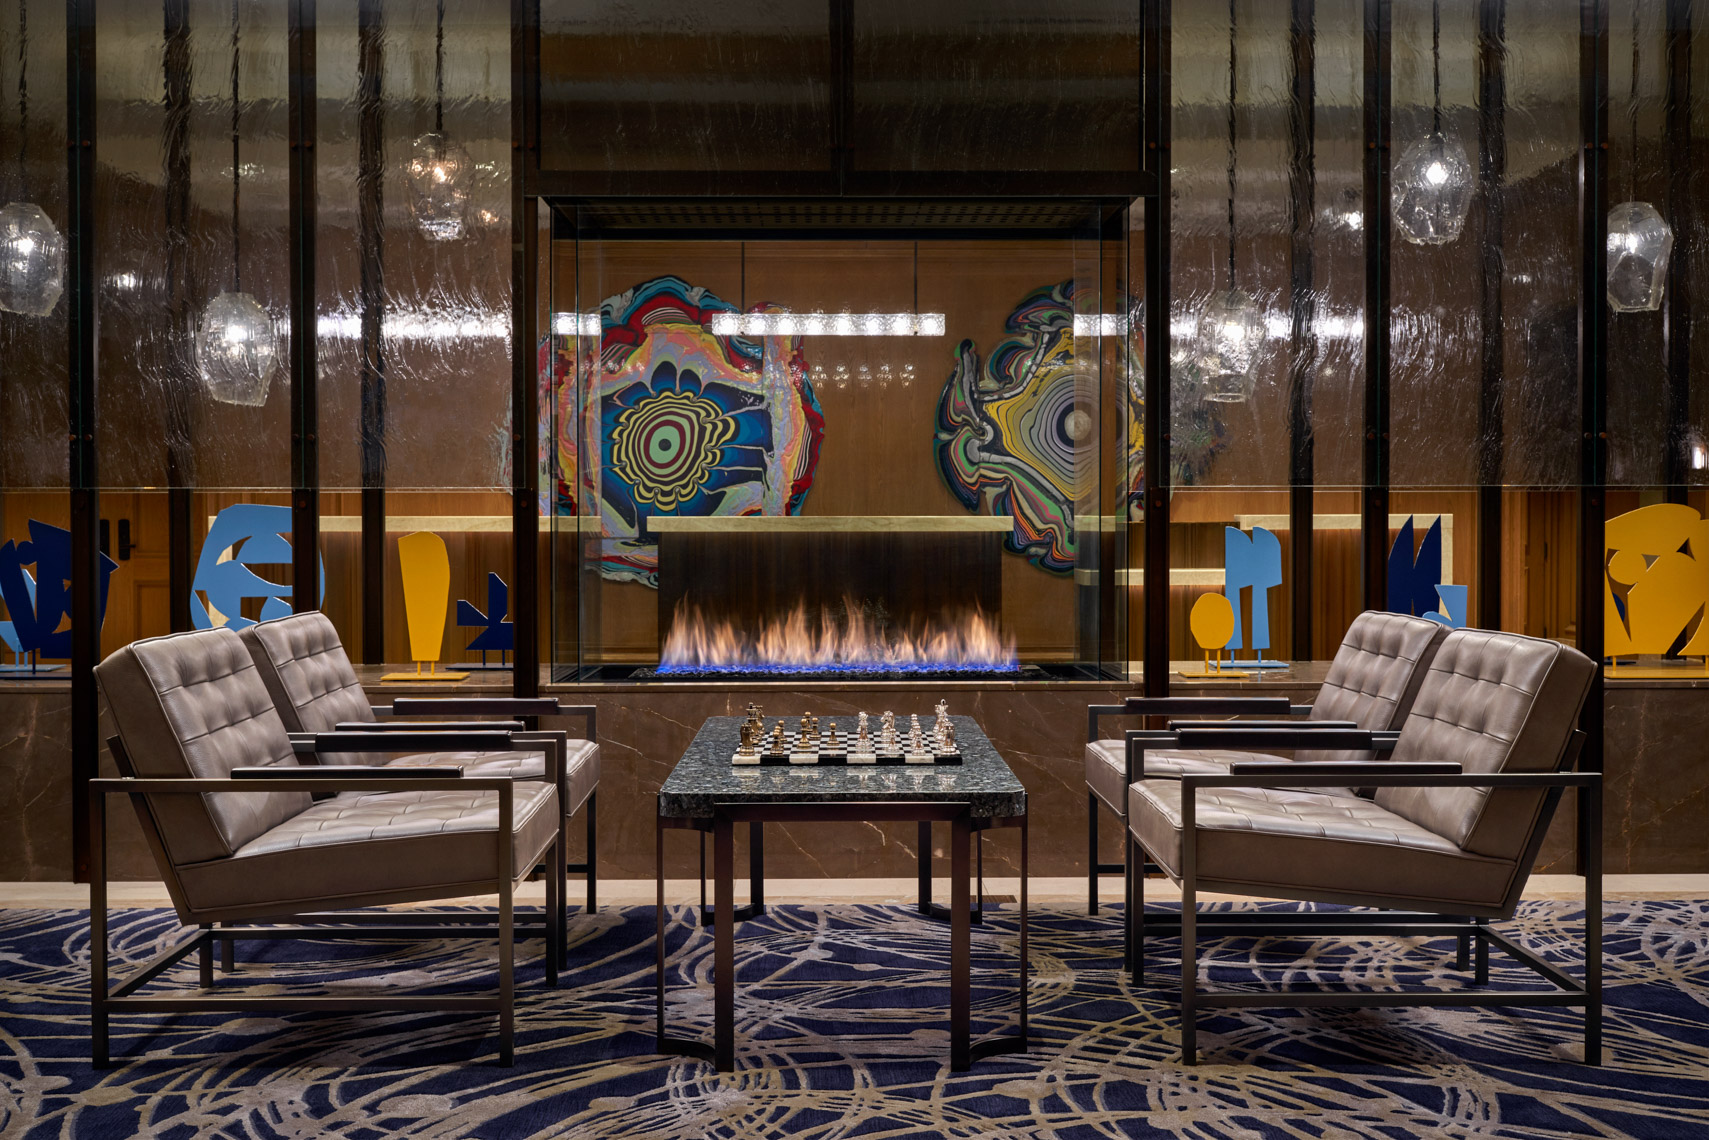 The Ritz-Carlton Cleveland - Lobby Fireplace